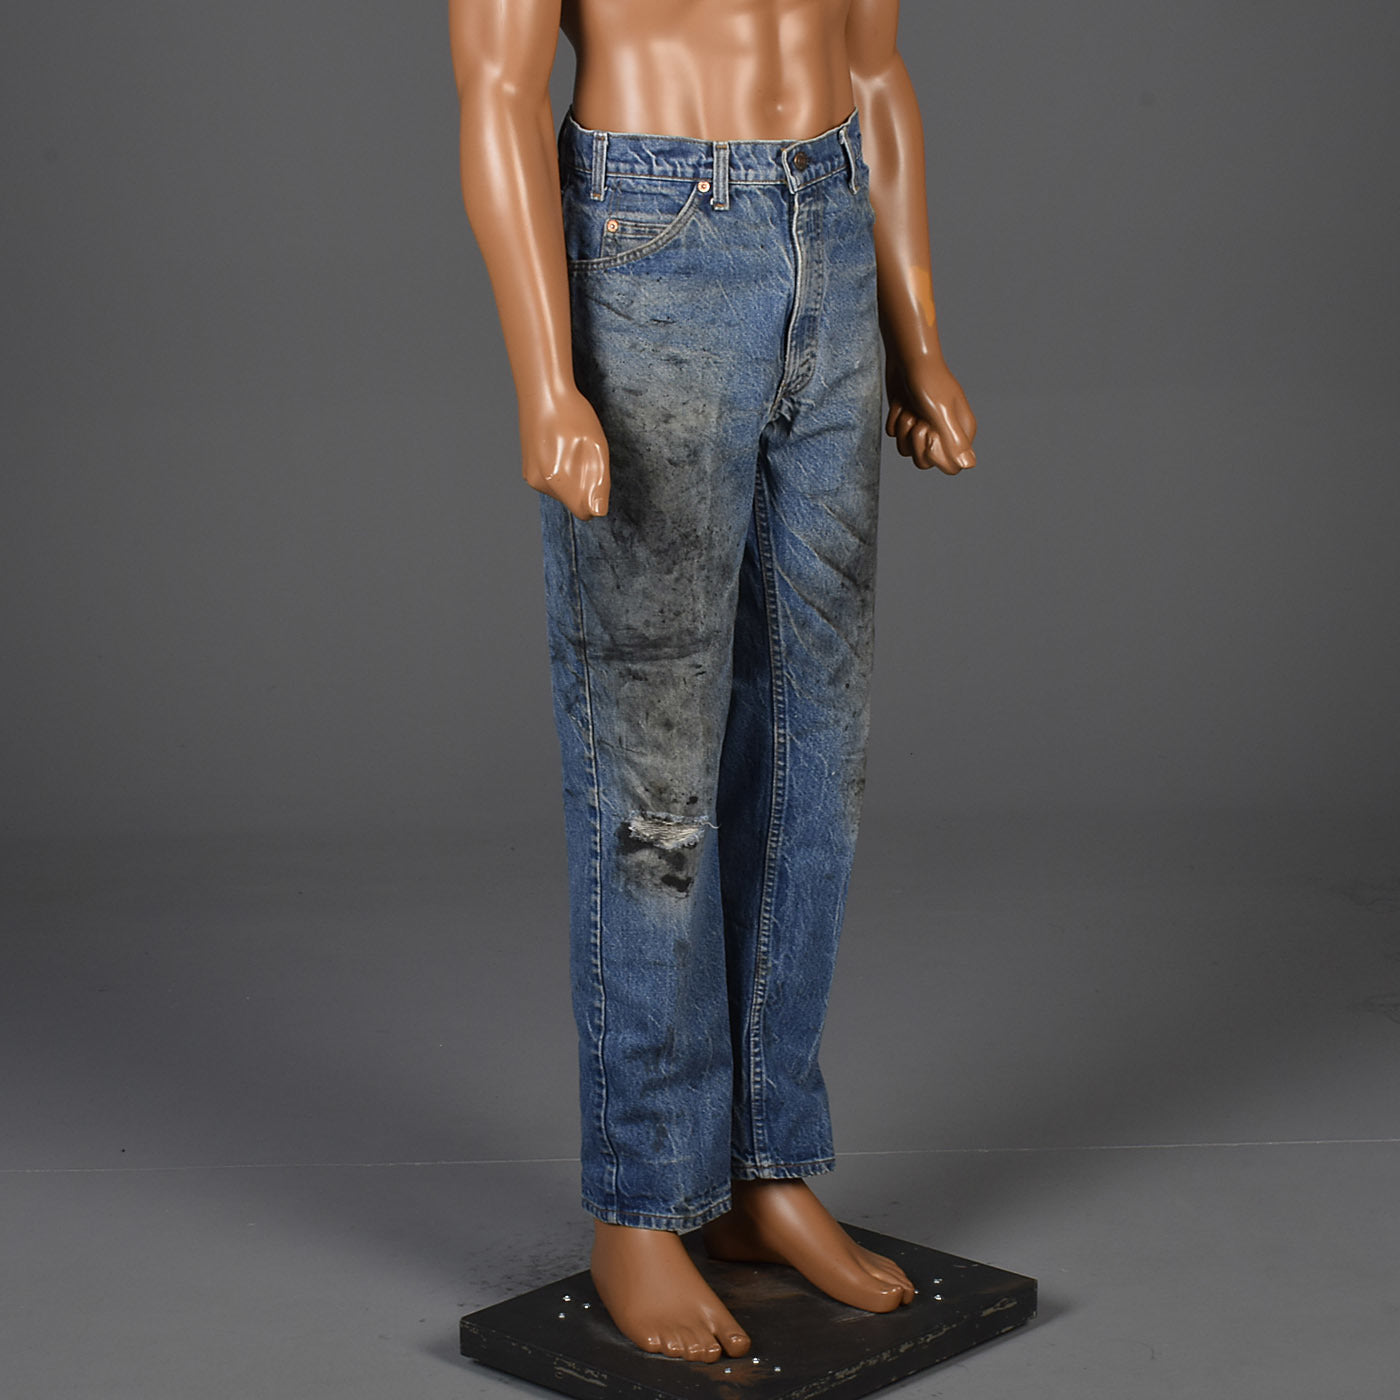 1970s Mens Distressed Levi's Jeans